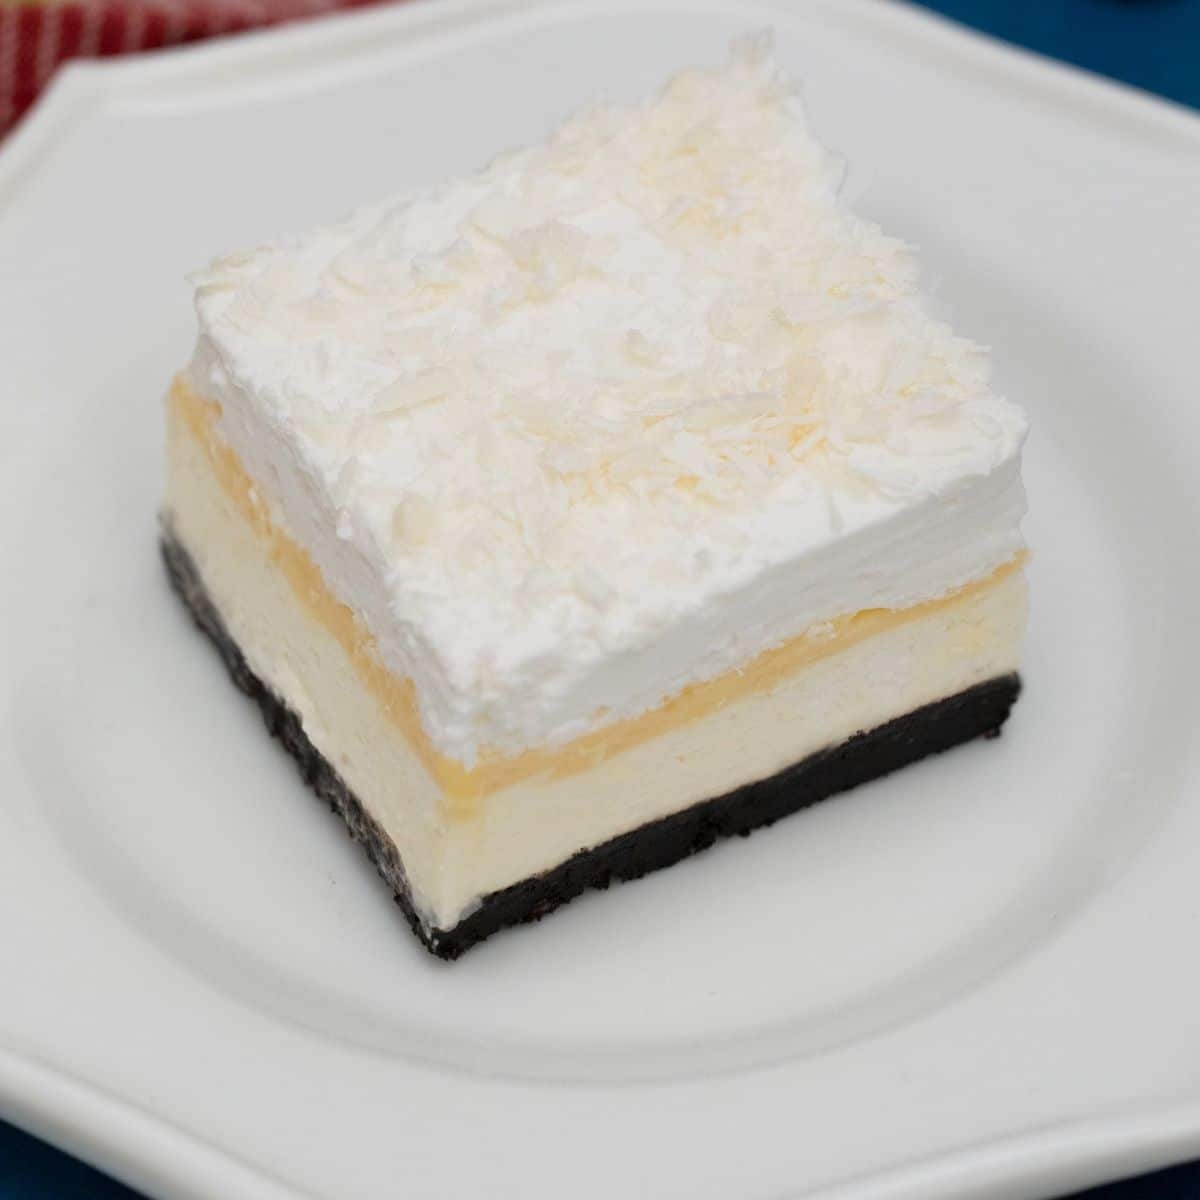 Slice of layered dessert on white plate